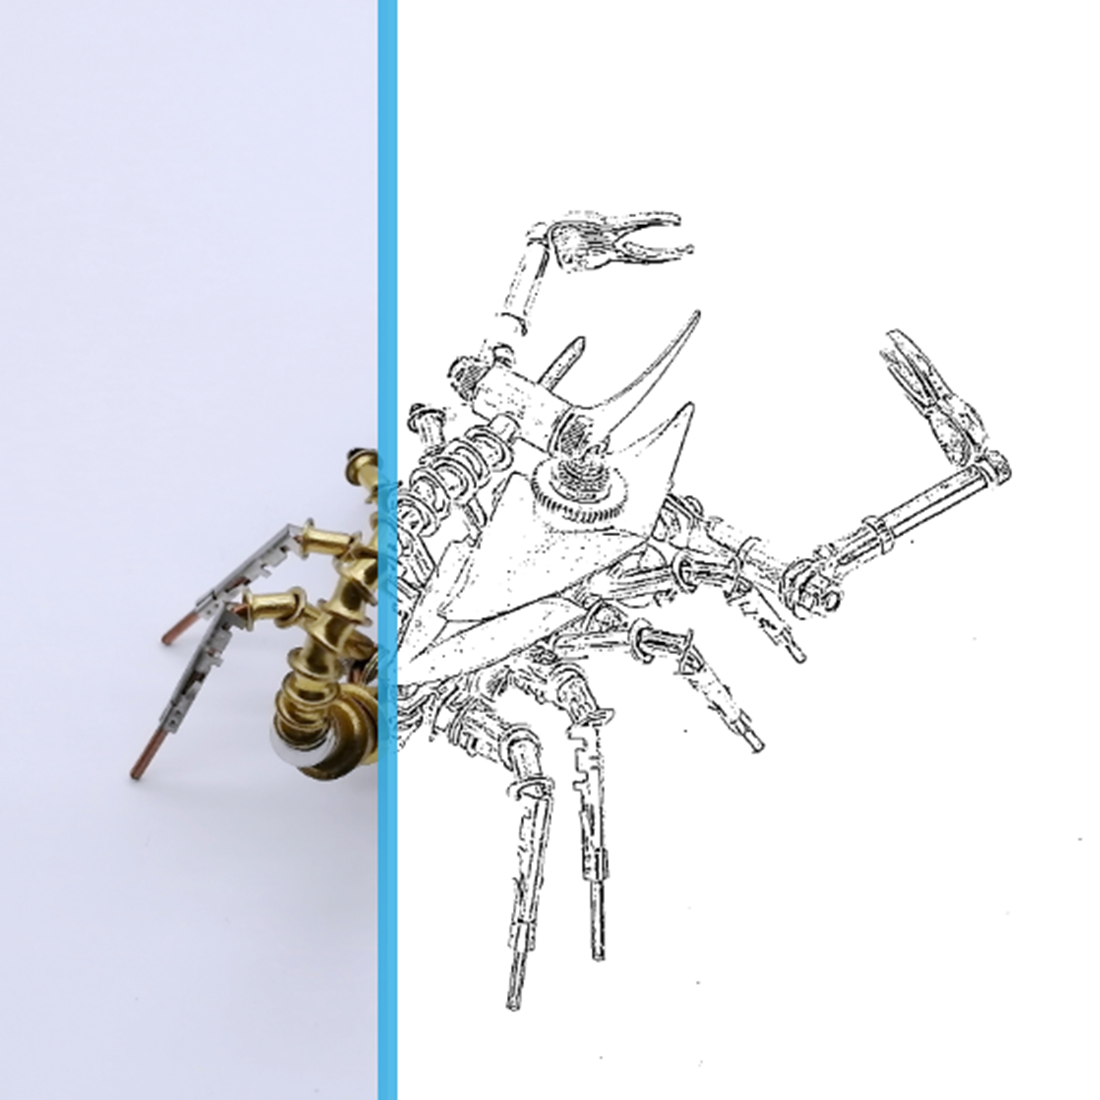 3D Metal Kits Mechanical DIY Scorpion Assembly Model 200+PCS